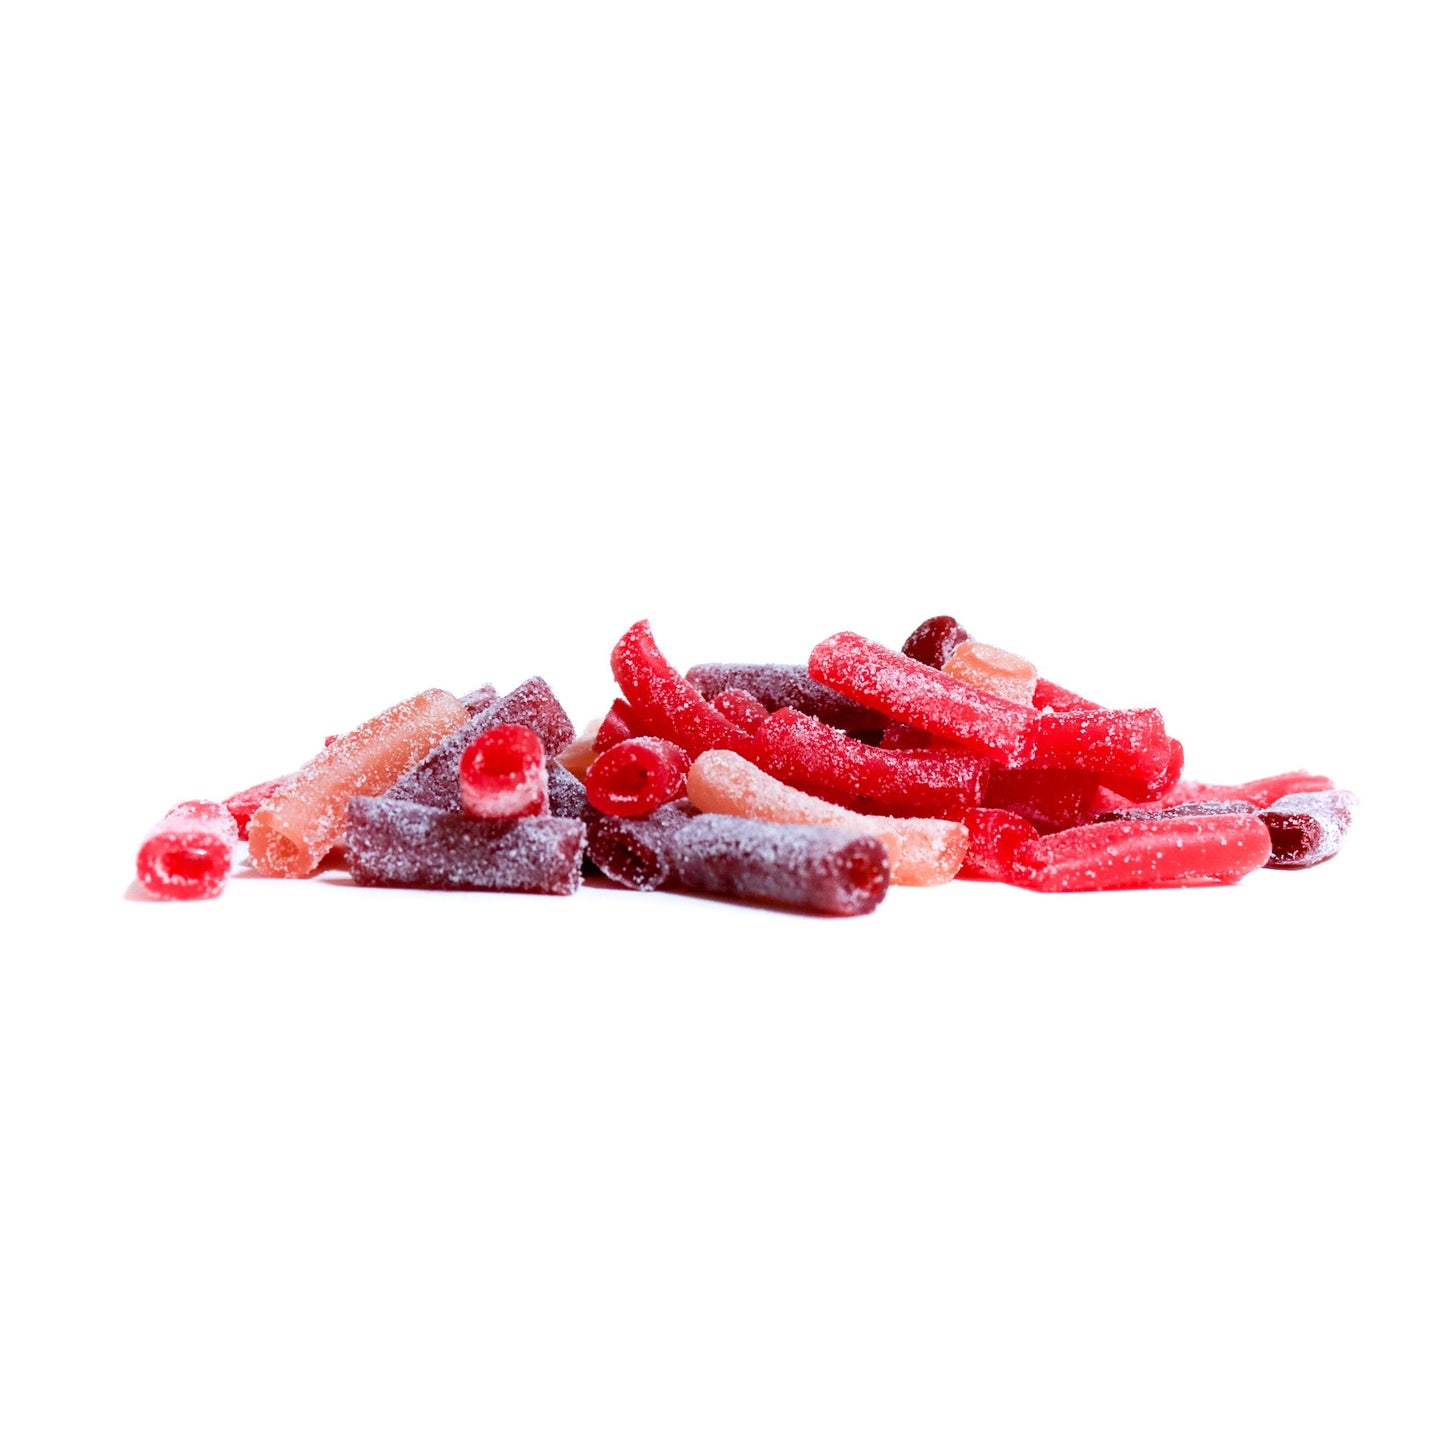 Strawberry, watermelon, cherry, and raspberry bulk sour candy bites